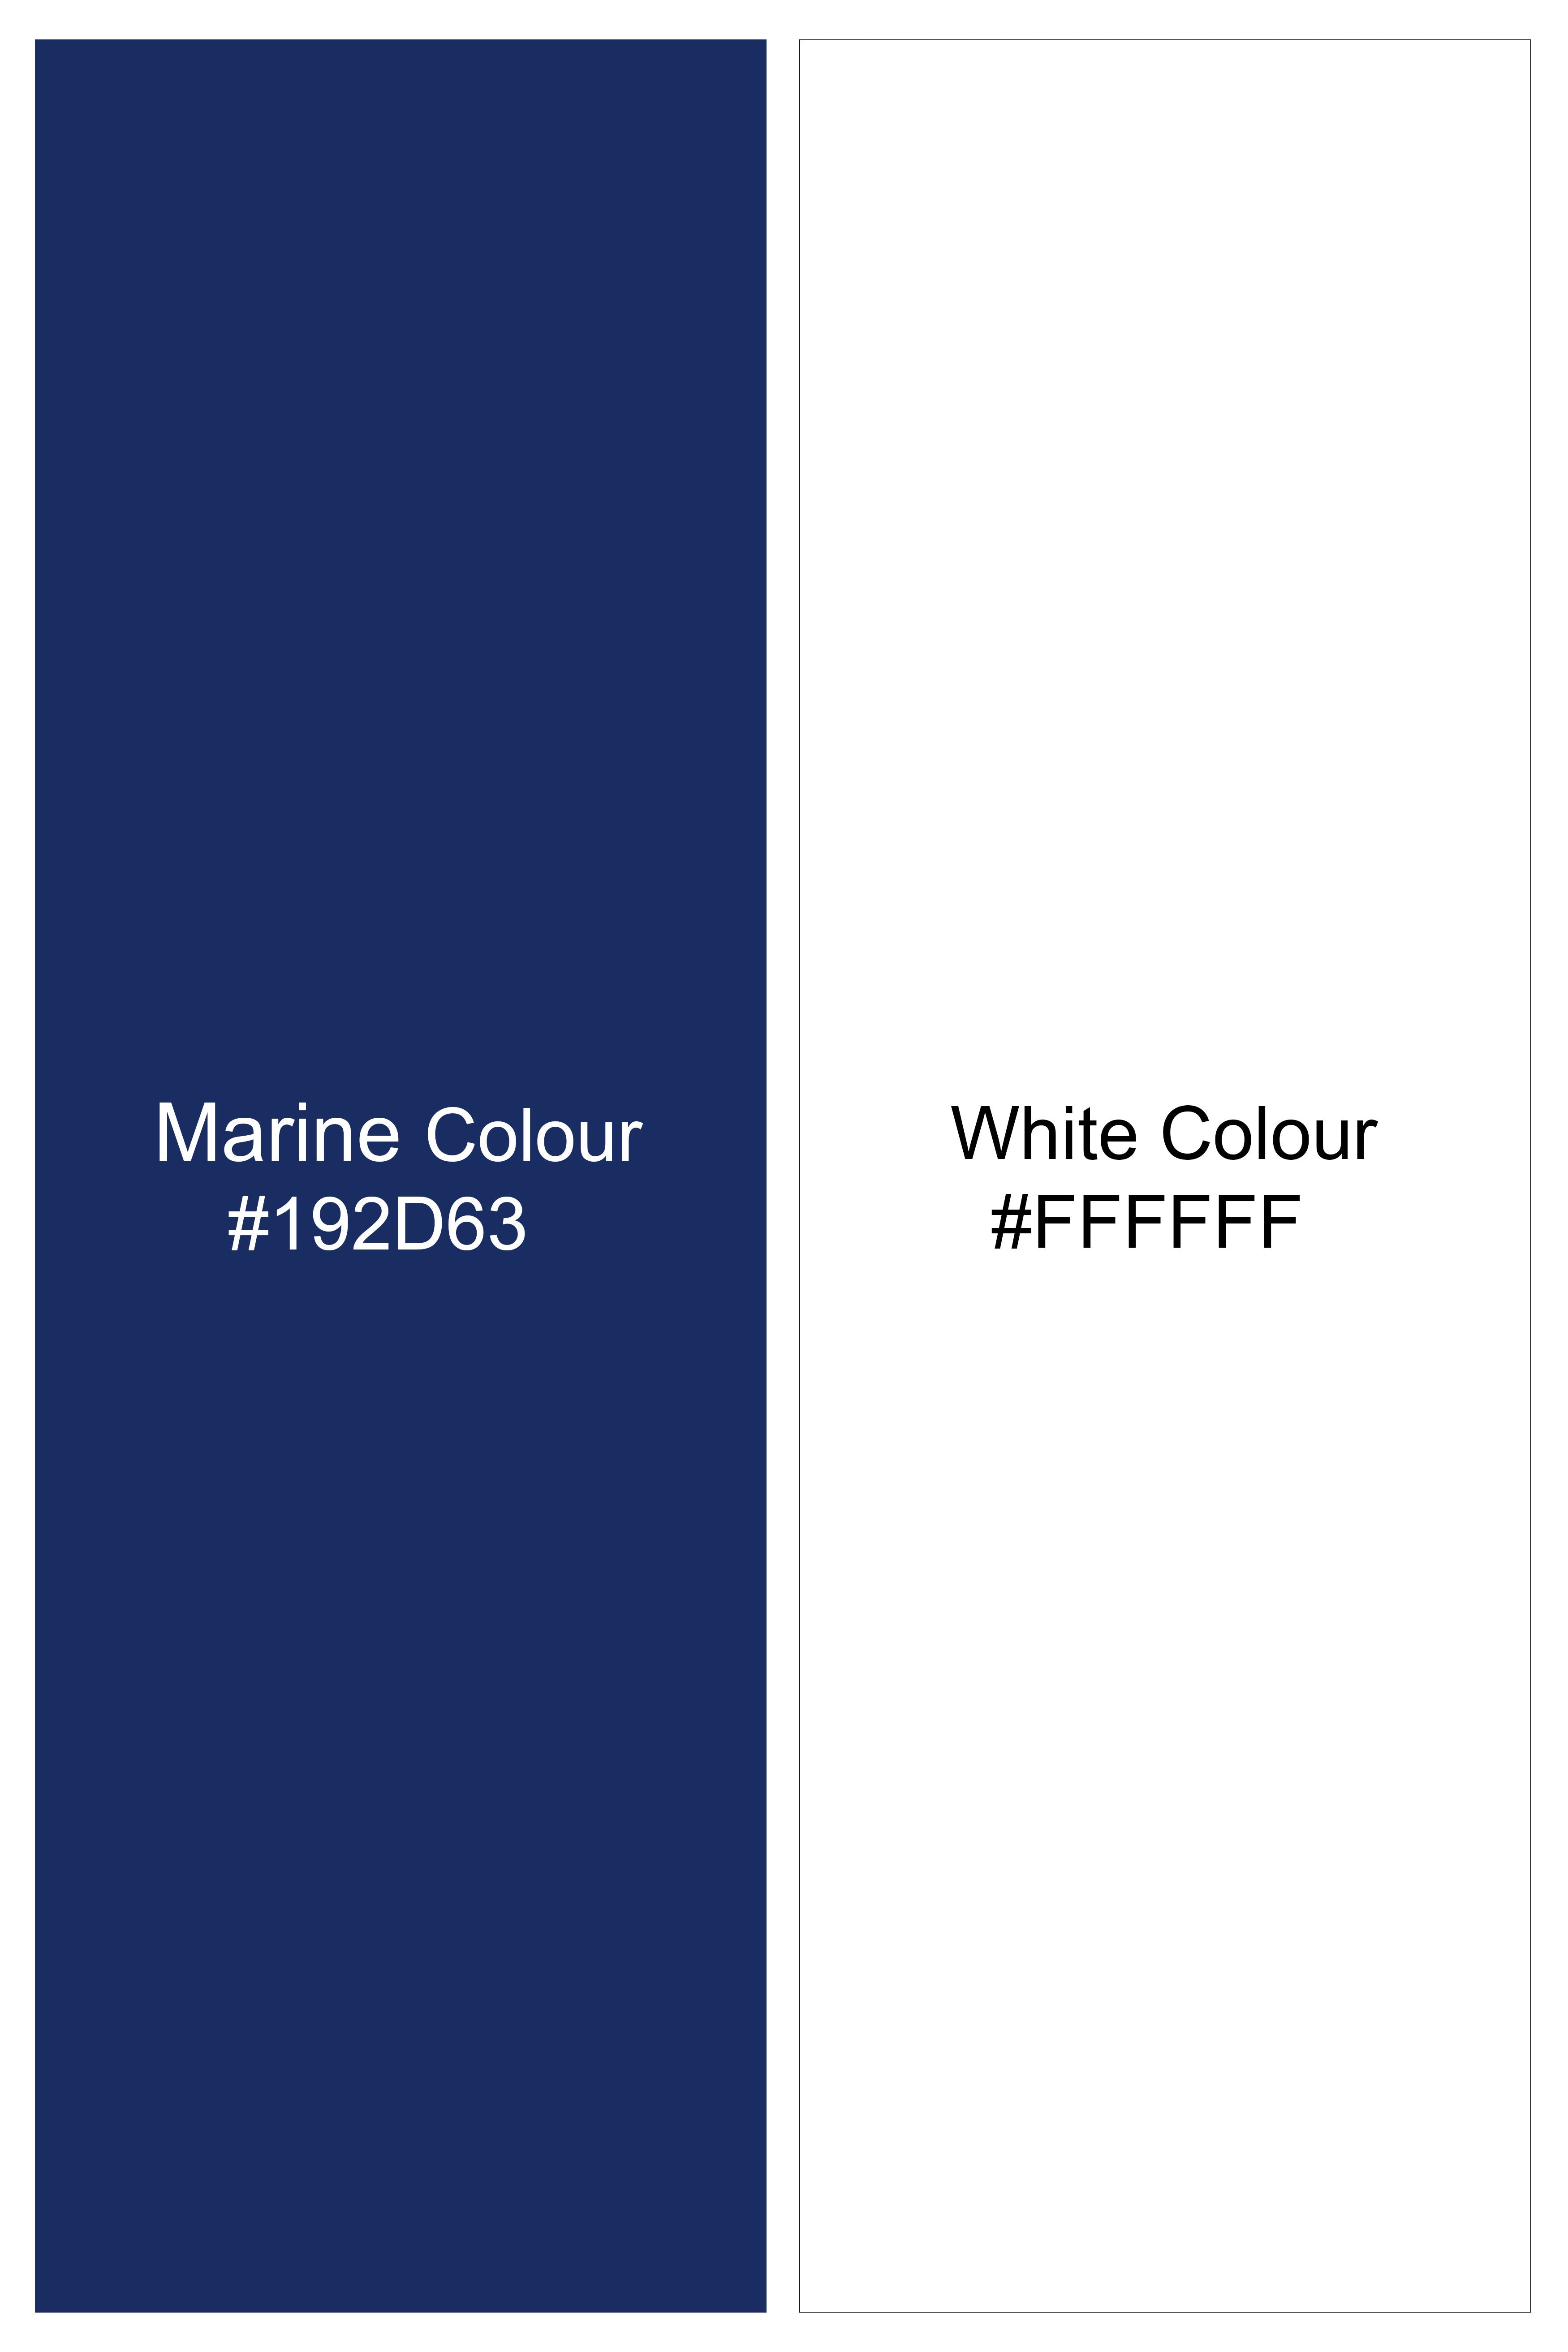 Marine Blue and White Windowpane Wool Rich Double Breasted Blazer BL3095-DB-36, BL3095-DB-38, BL3095-DB-40, BL3095-DB-42, BL3095-DB-44, BL3095-DB-46, BL3095-DB-48, BL3095-DB-50, BL3095-DB-52, BL3095-DB-54, BL3095-DB-56, BL3095-DB-58, BL3095-DB-60